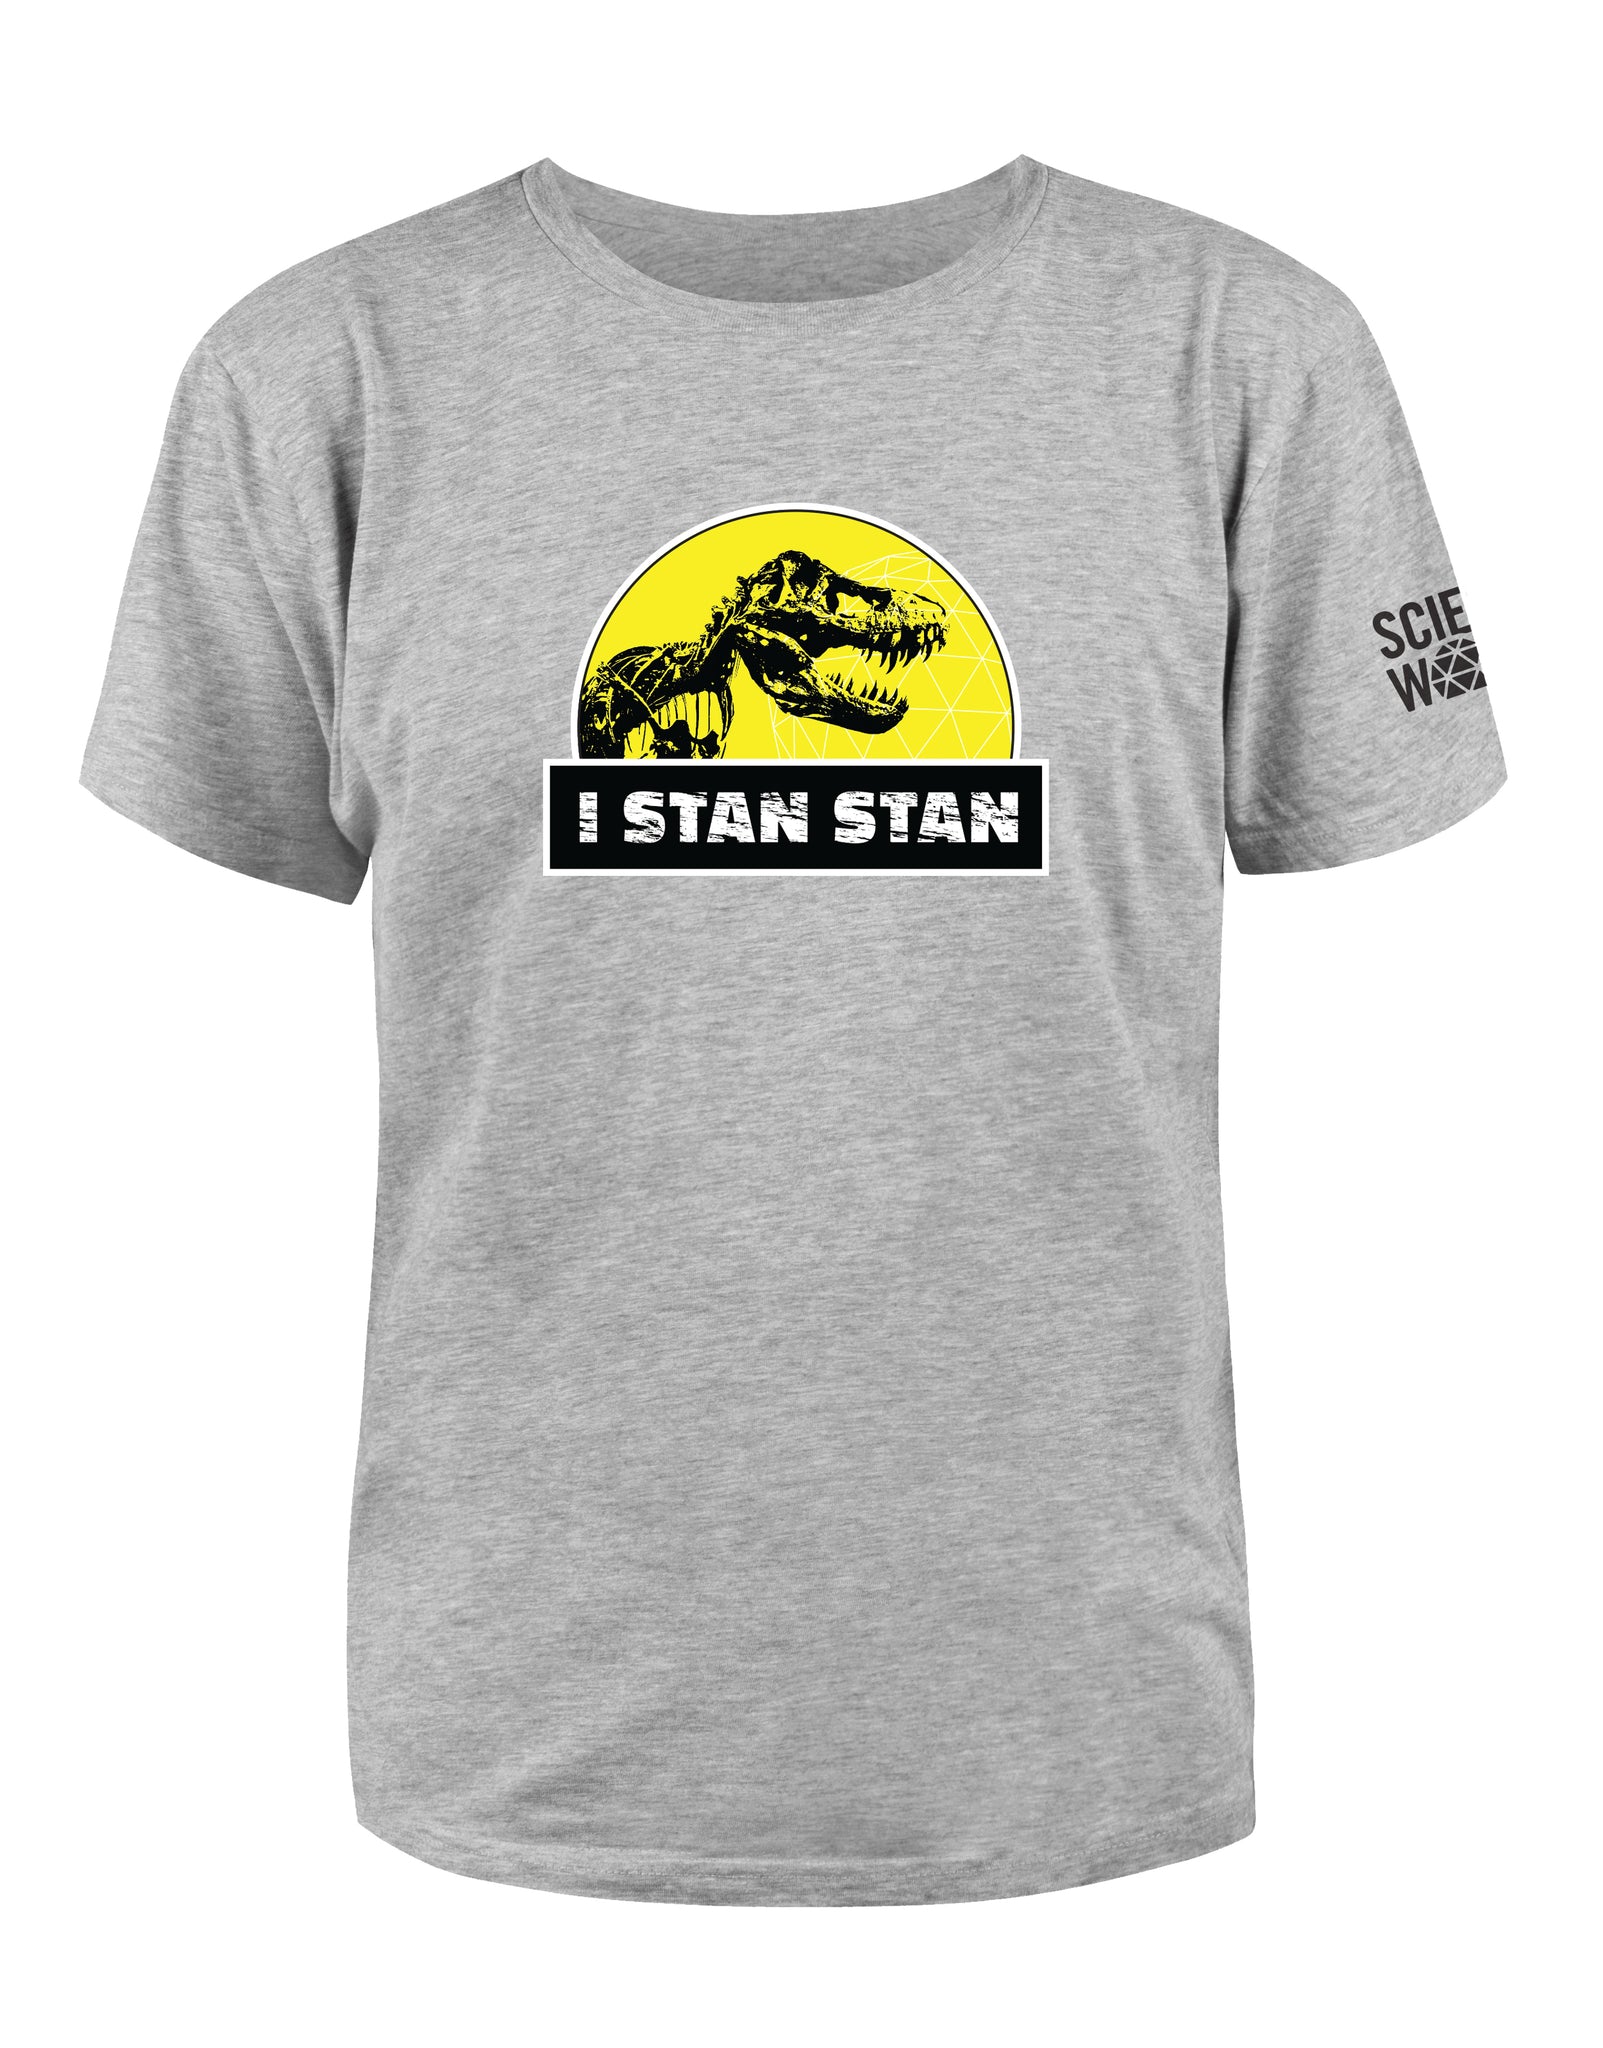 "I STAN STAN" ADULT T REX SHIRT